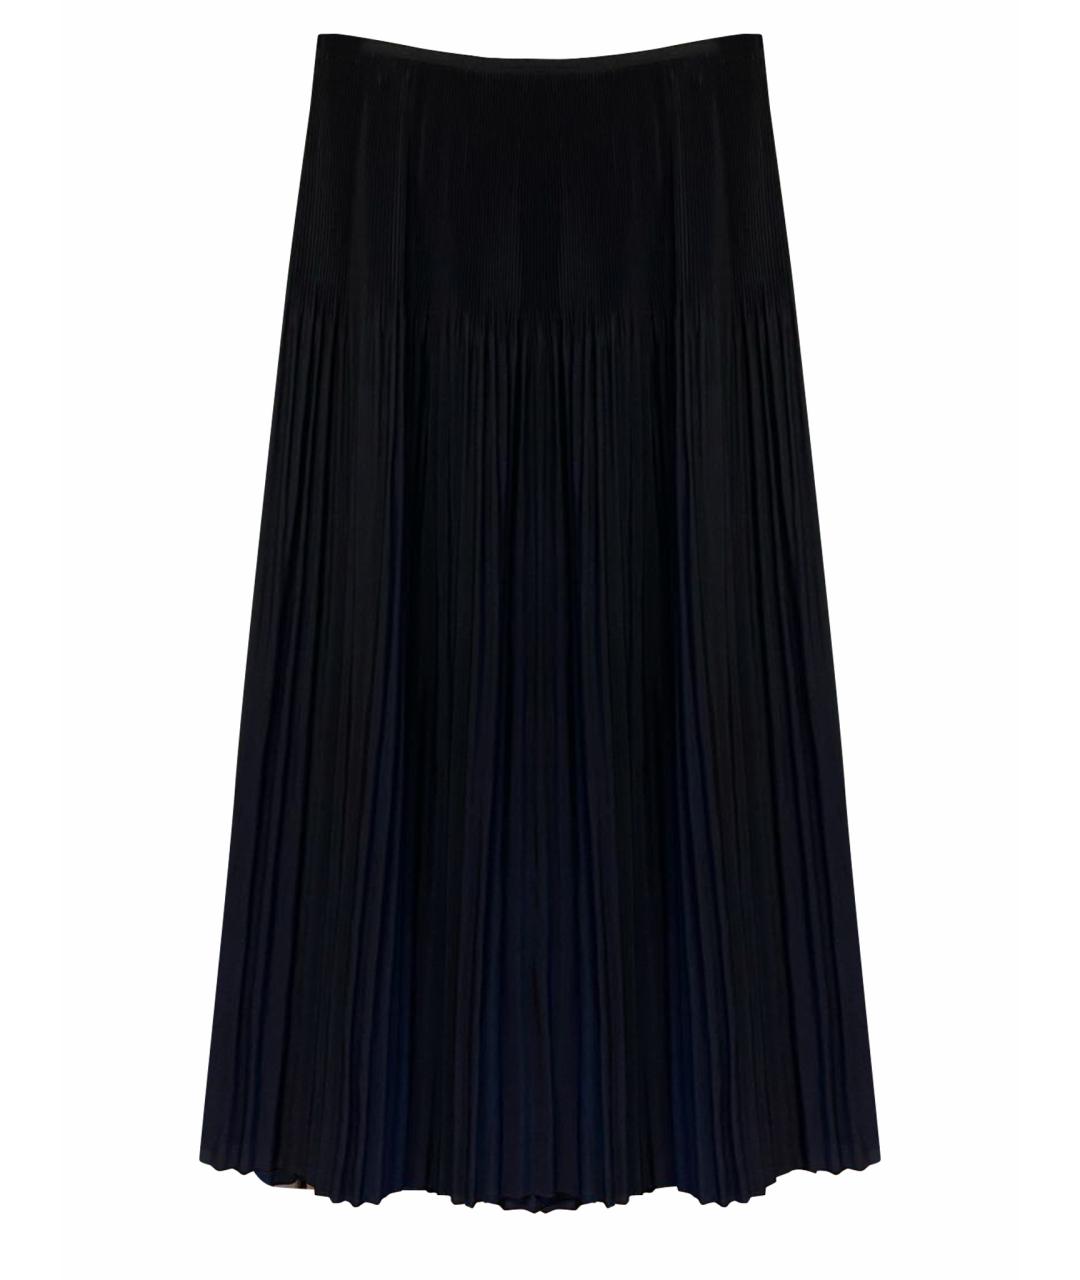 MICHAEL KORS Темно-синяя полиэстеровая юбка макси, фото 1